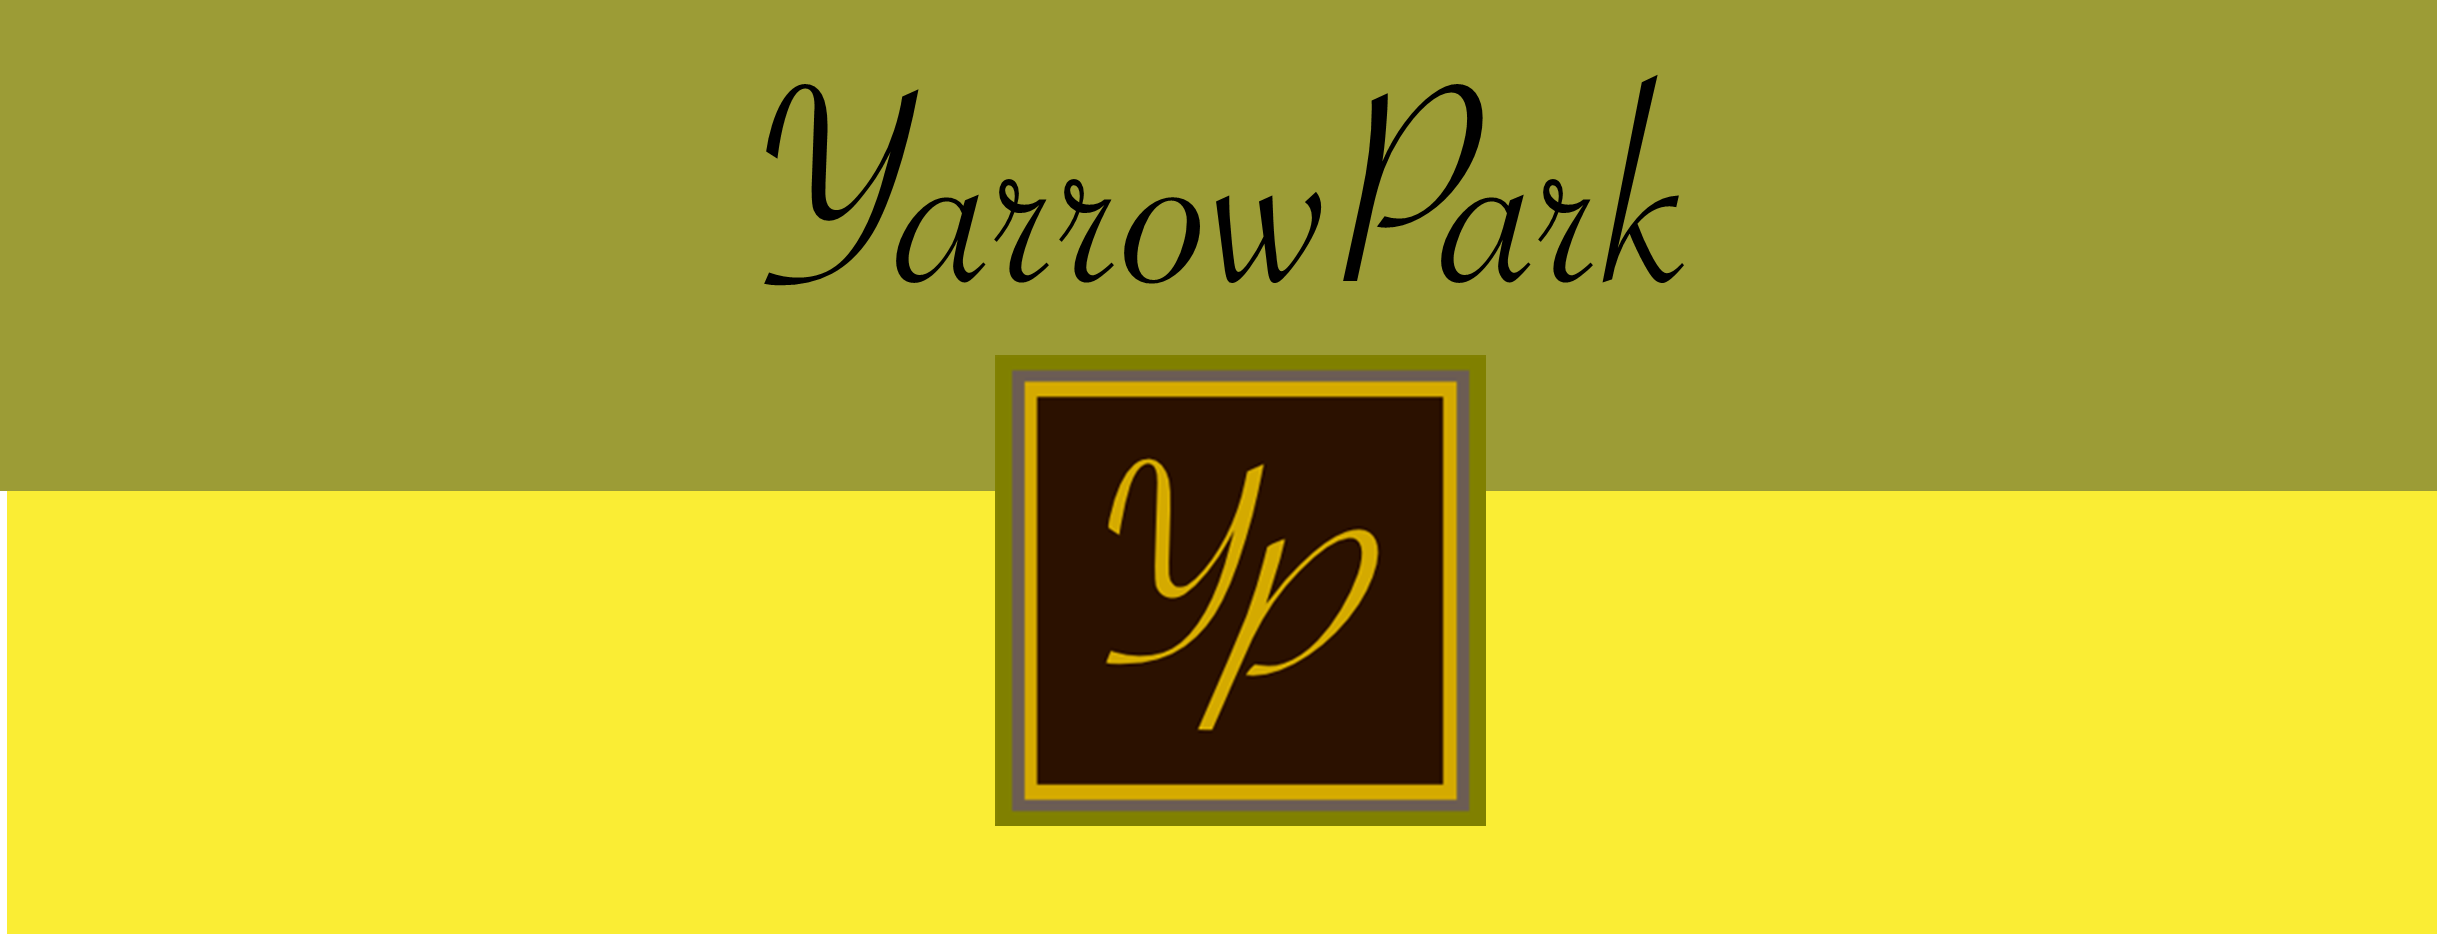 Yarrow Park